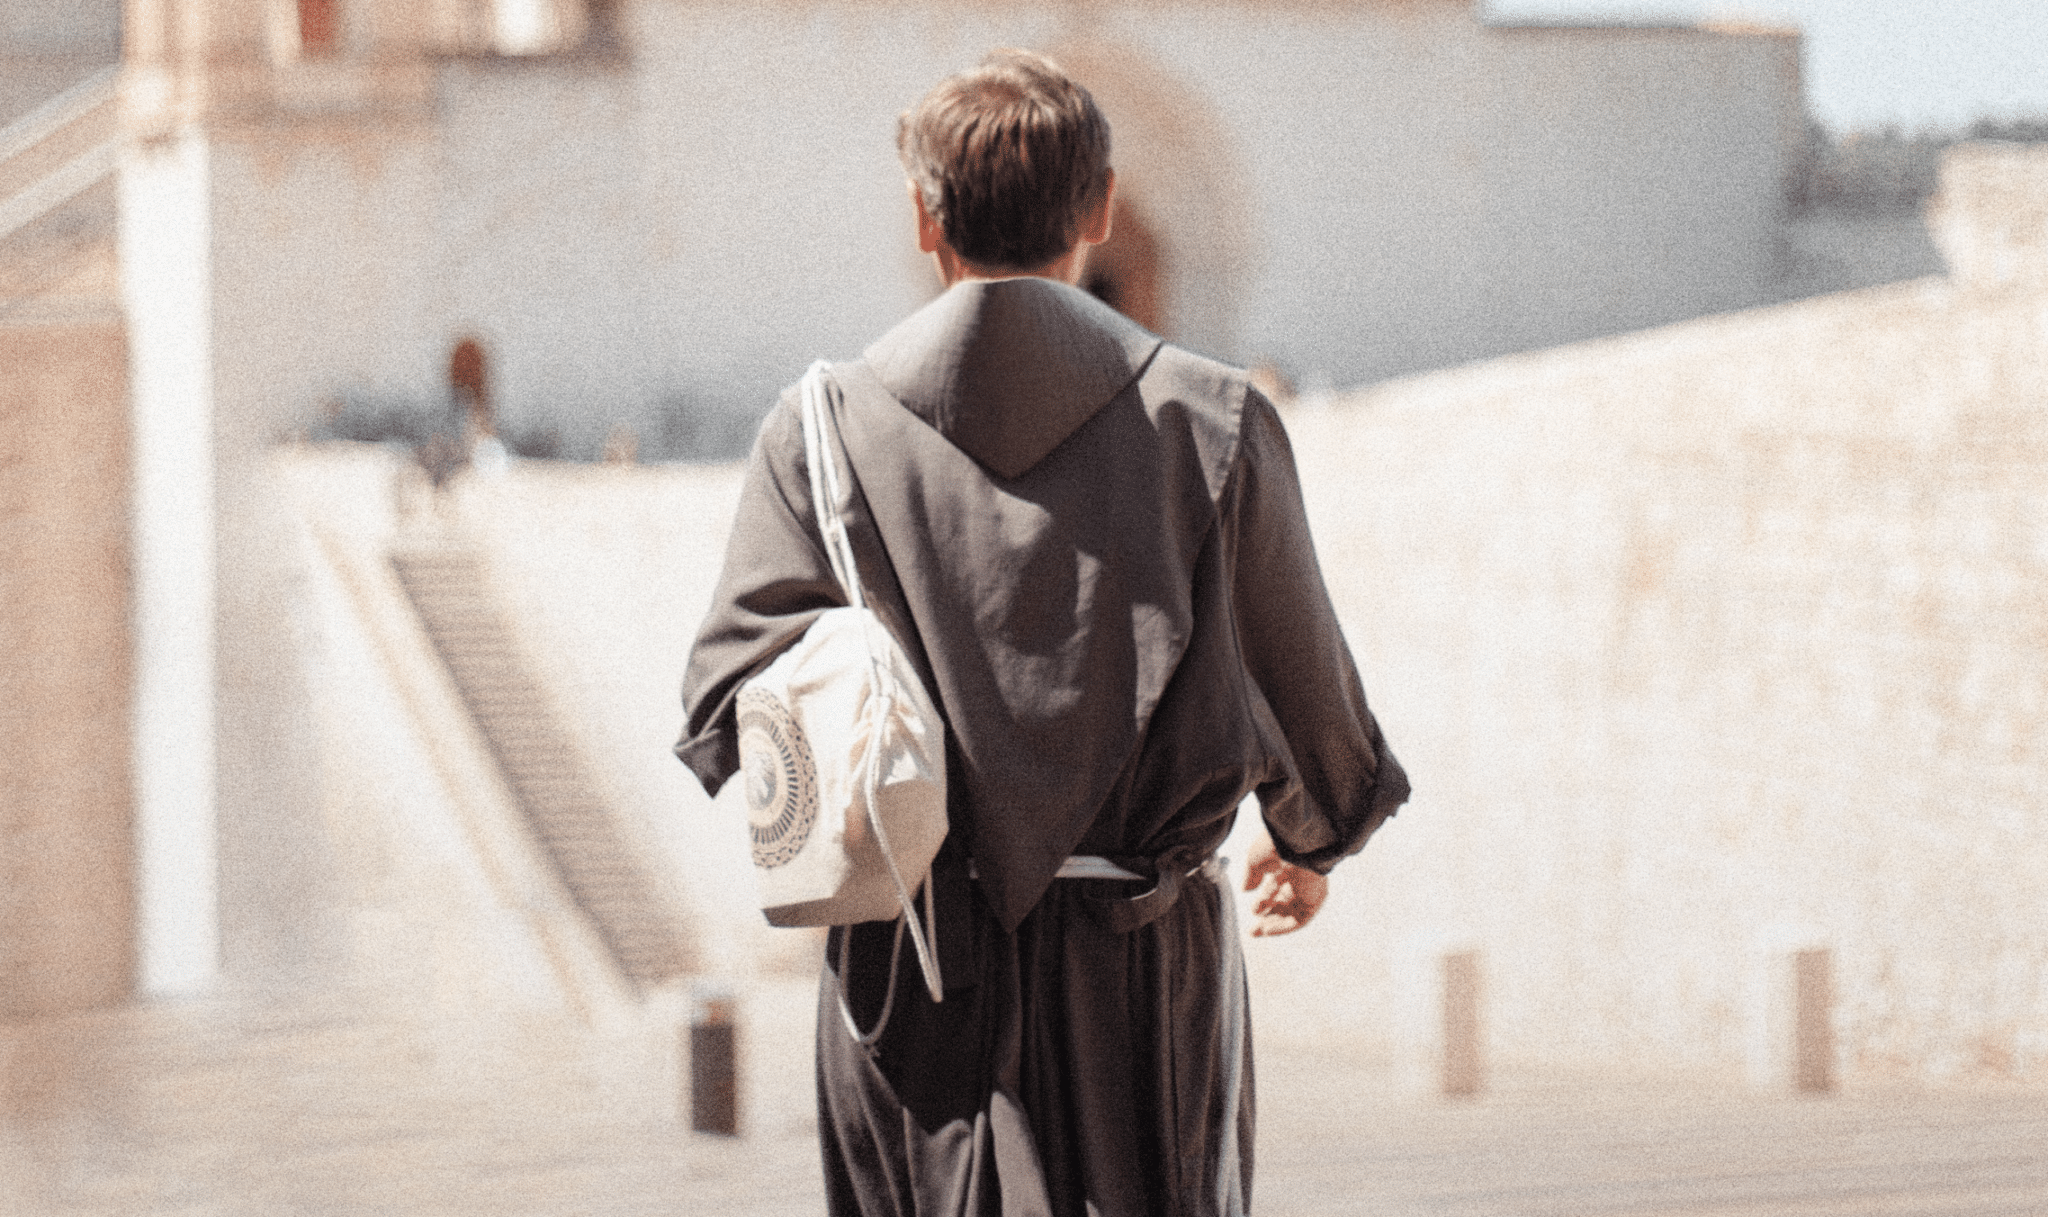 Franciscan- Friar walking near the Basilica of Saint Francis of Assisi